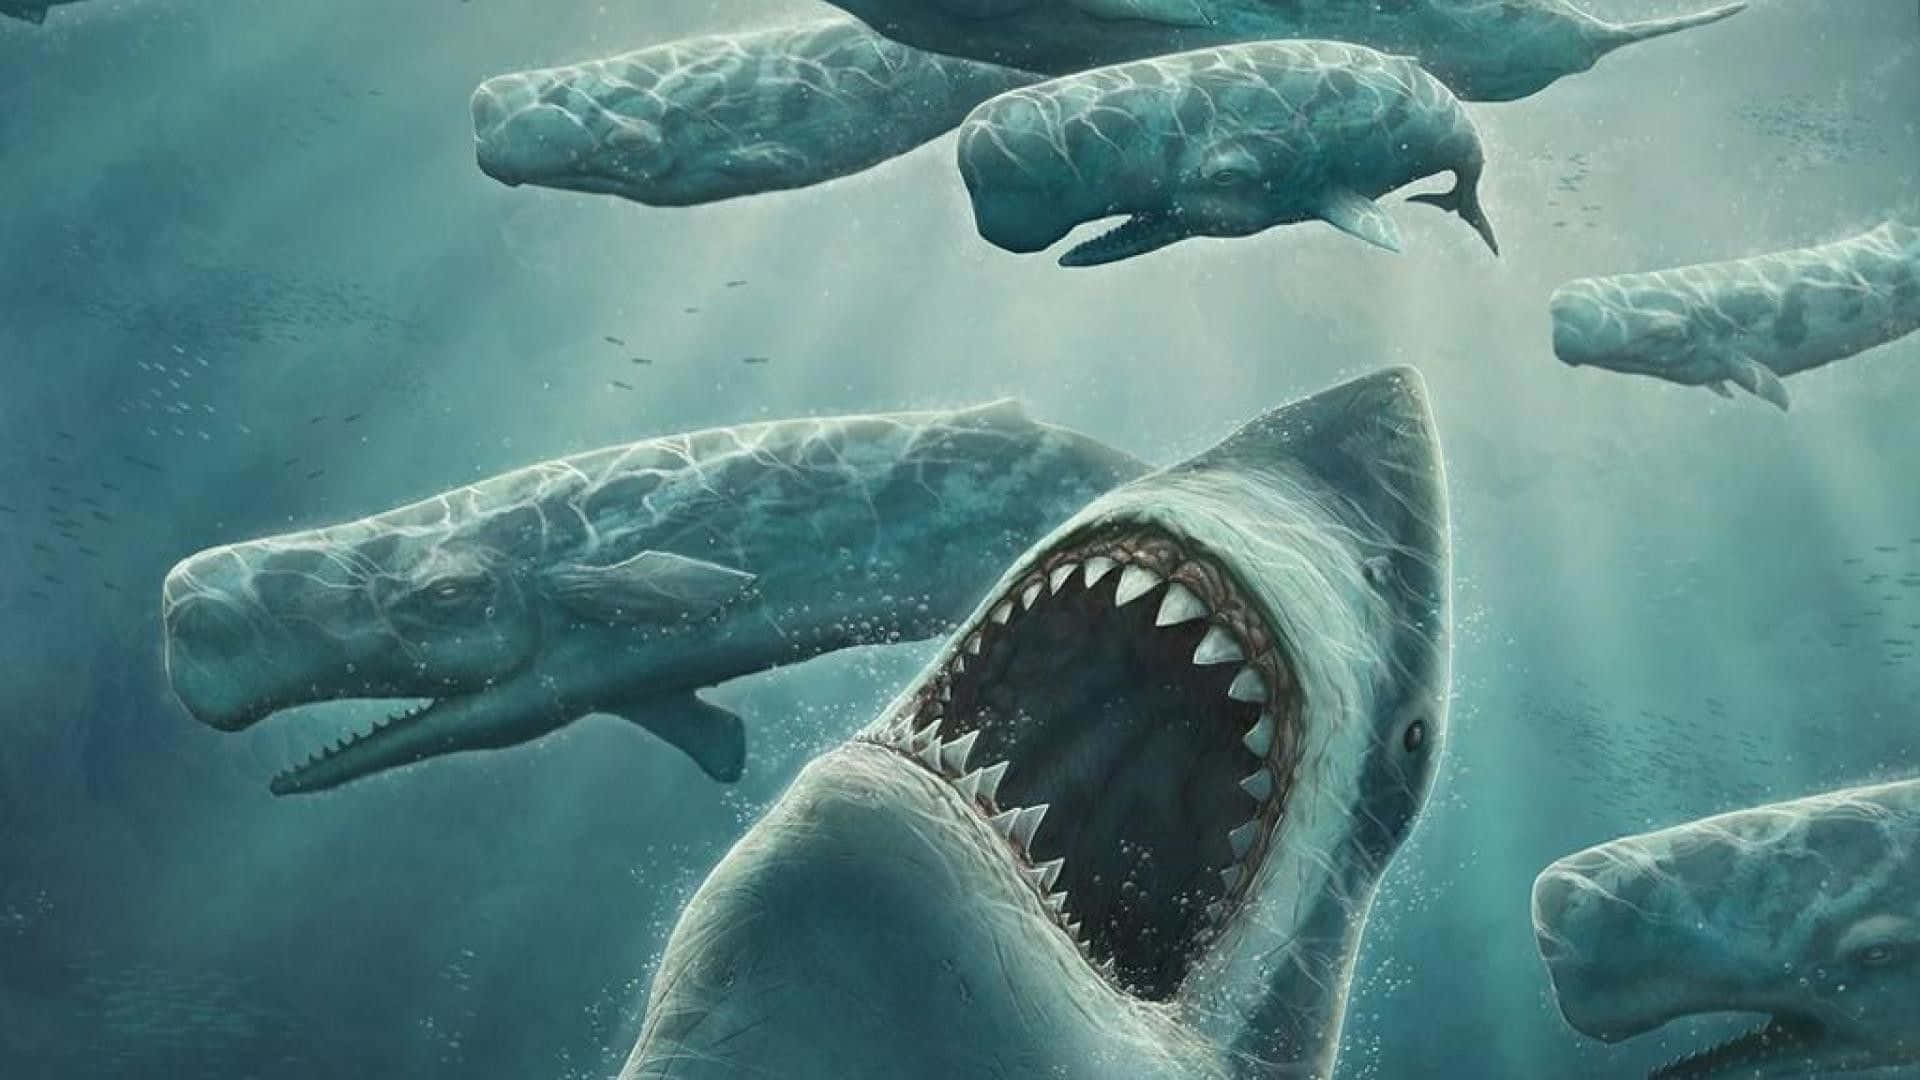 Megalodon, an extinct species of giant shark